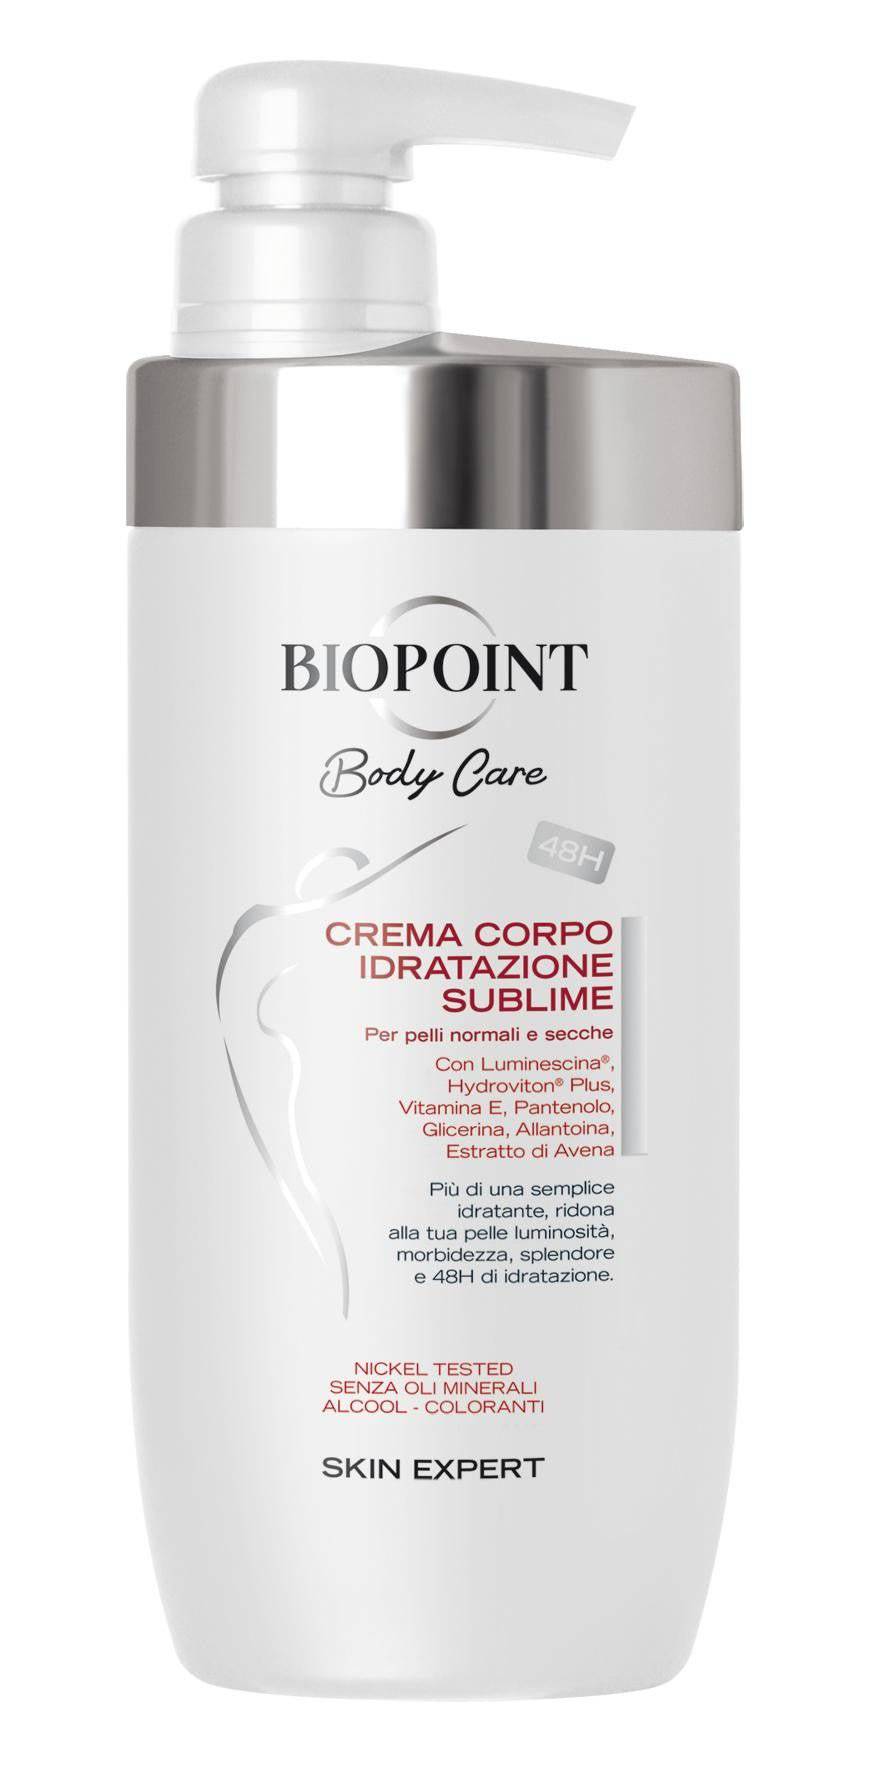 Biopoint Crema Corpo Idratazione Sublime - Jasmine Parfums- [ean]